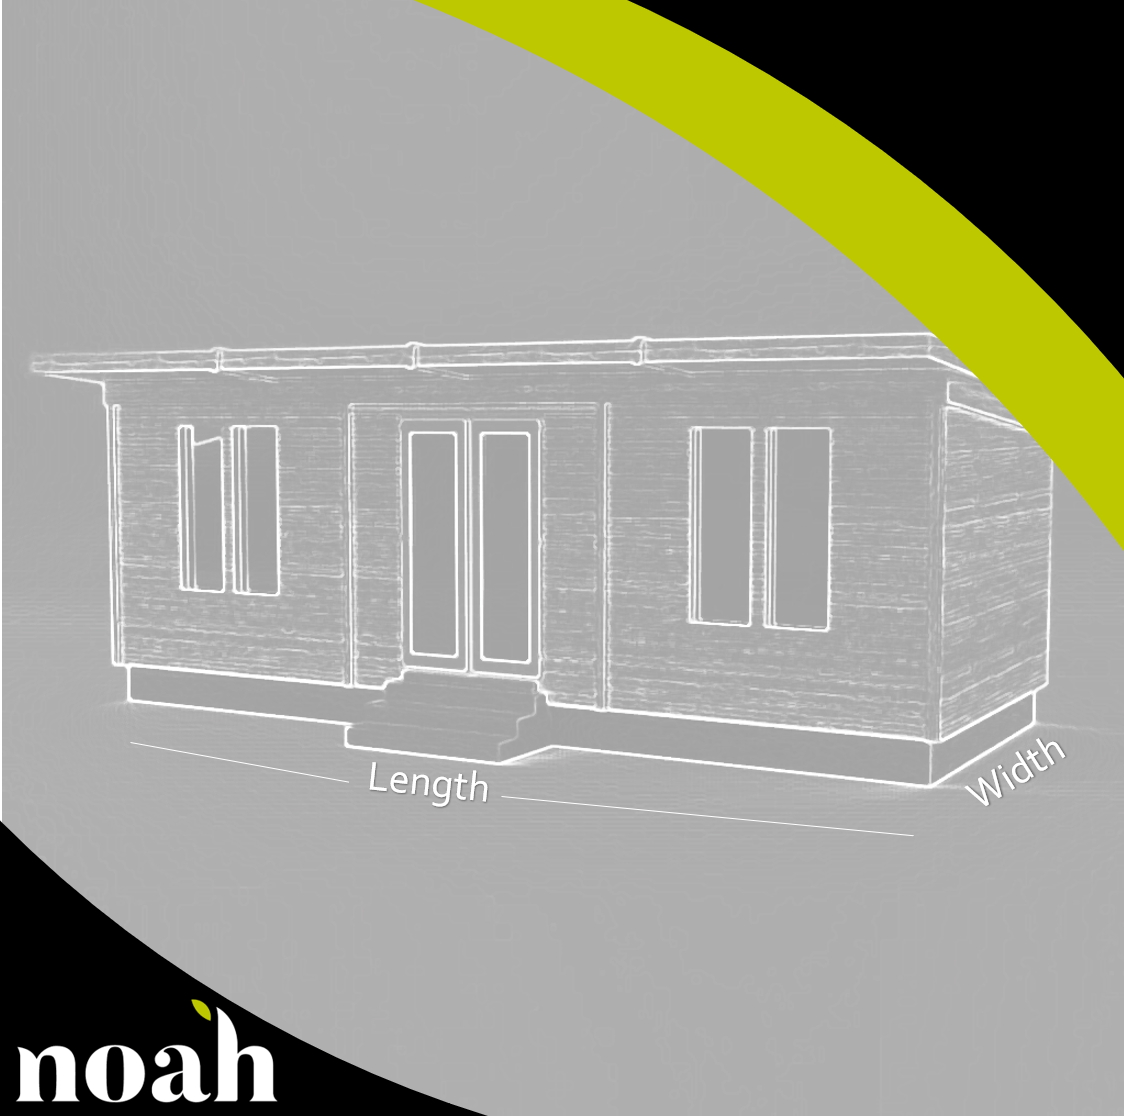 norton-log-cabin-dimensions